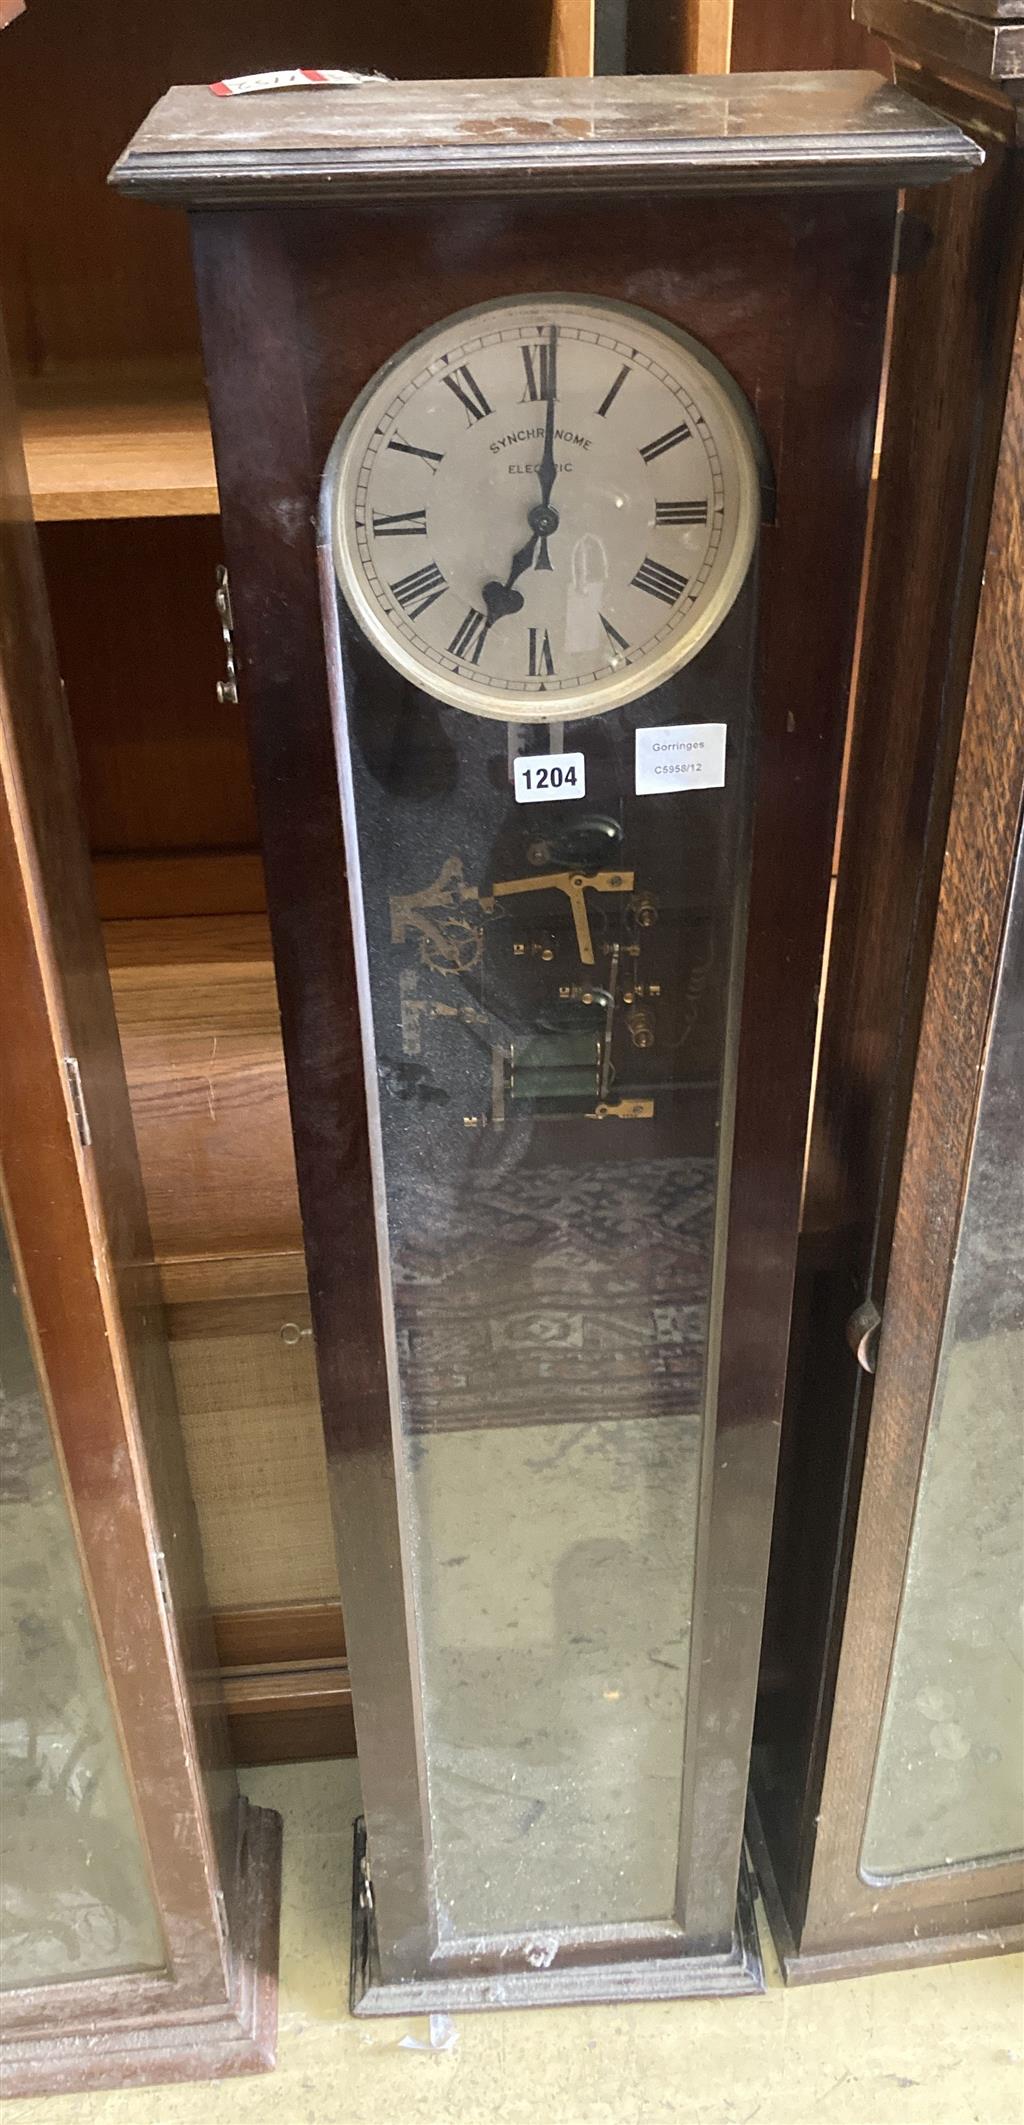 A Synchronome electric mahogany cased pendulum master clock